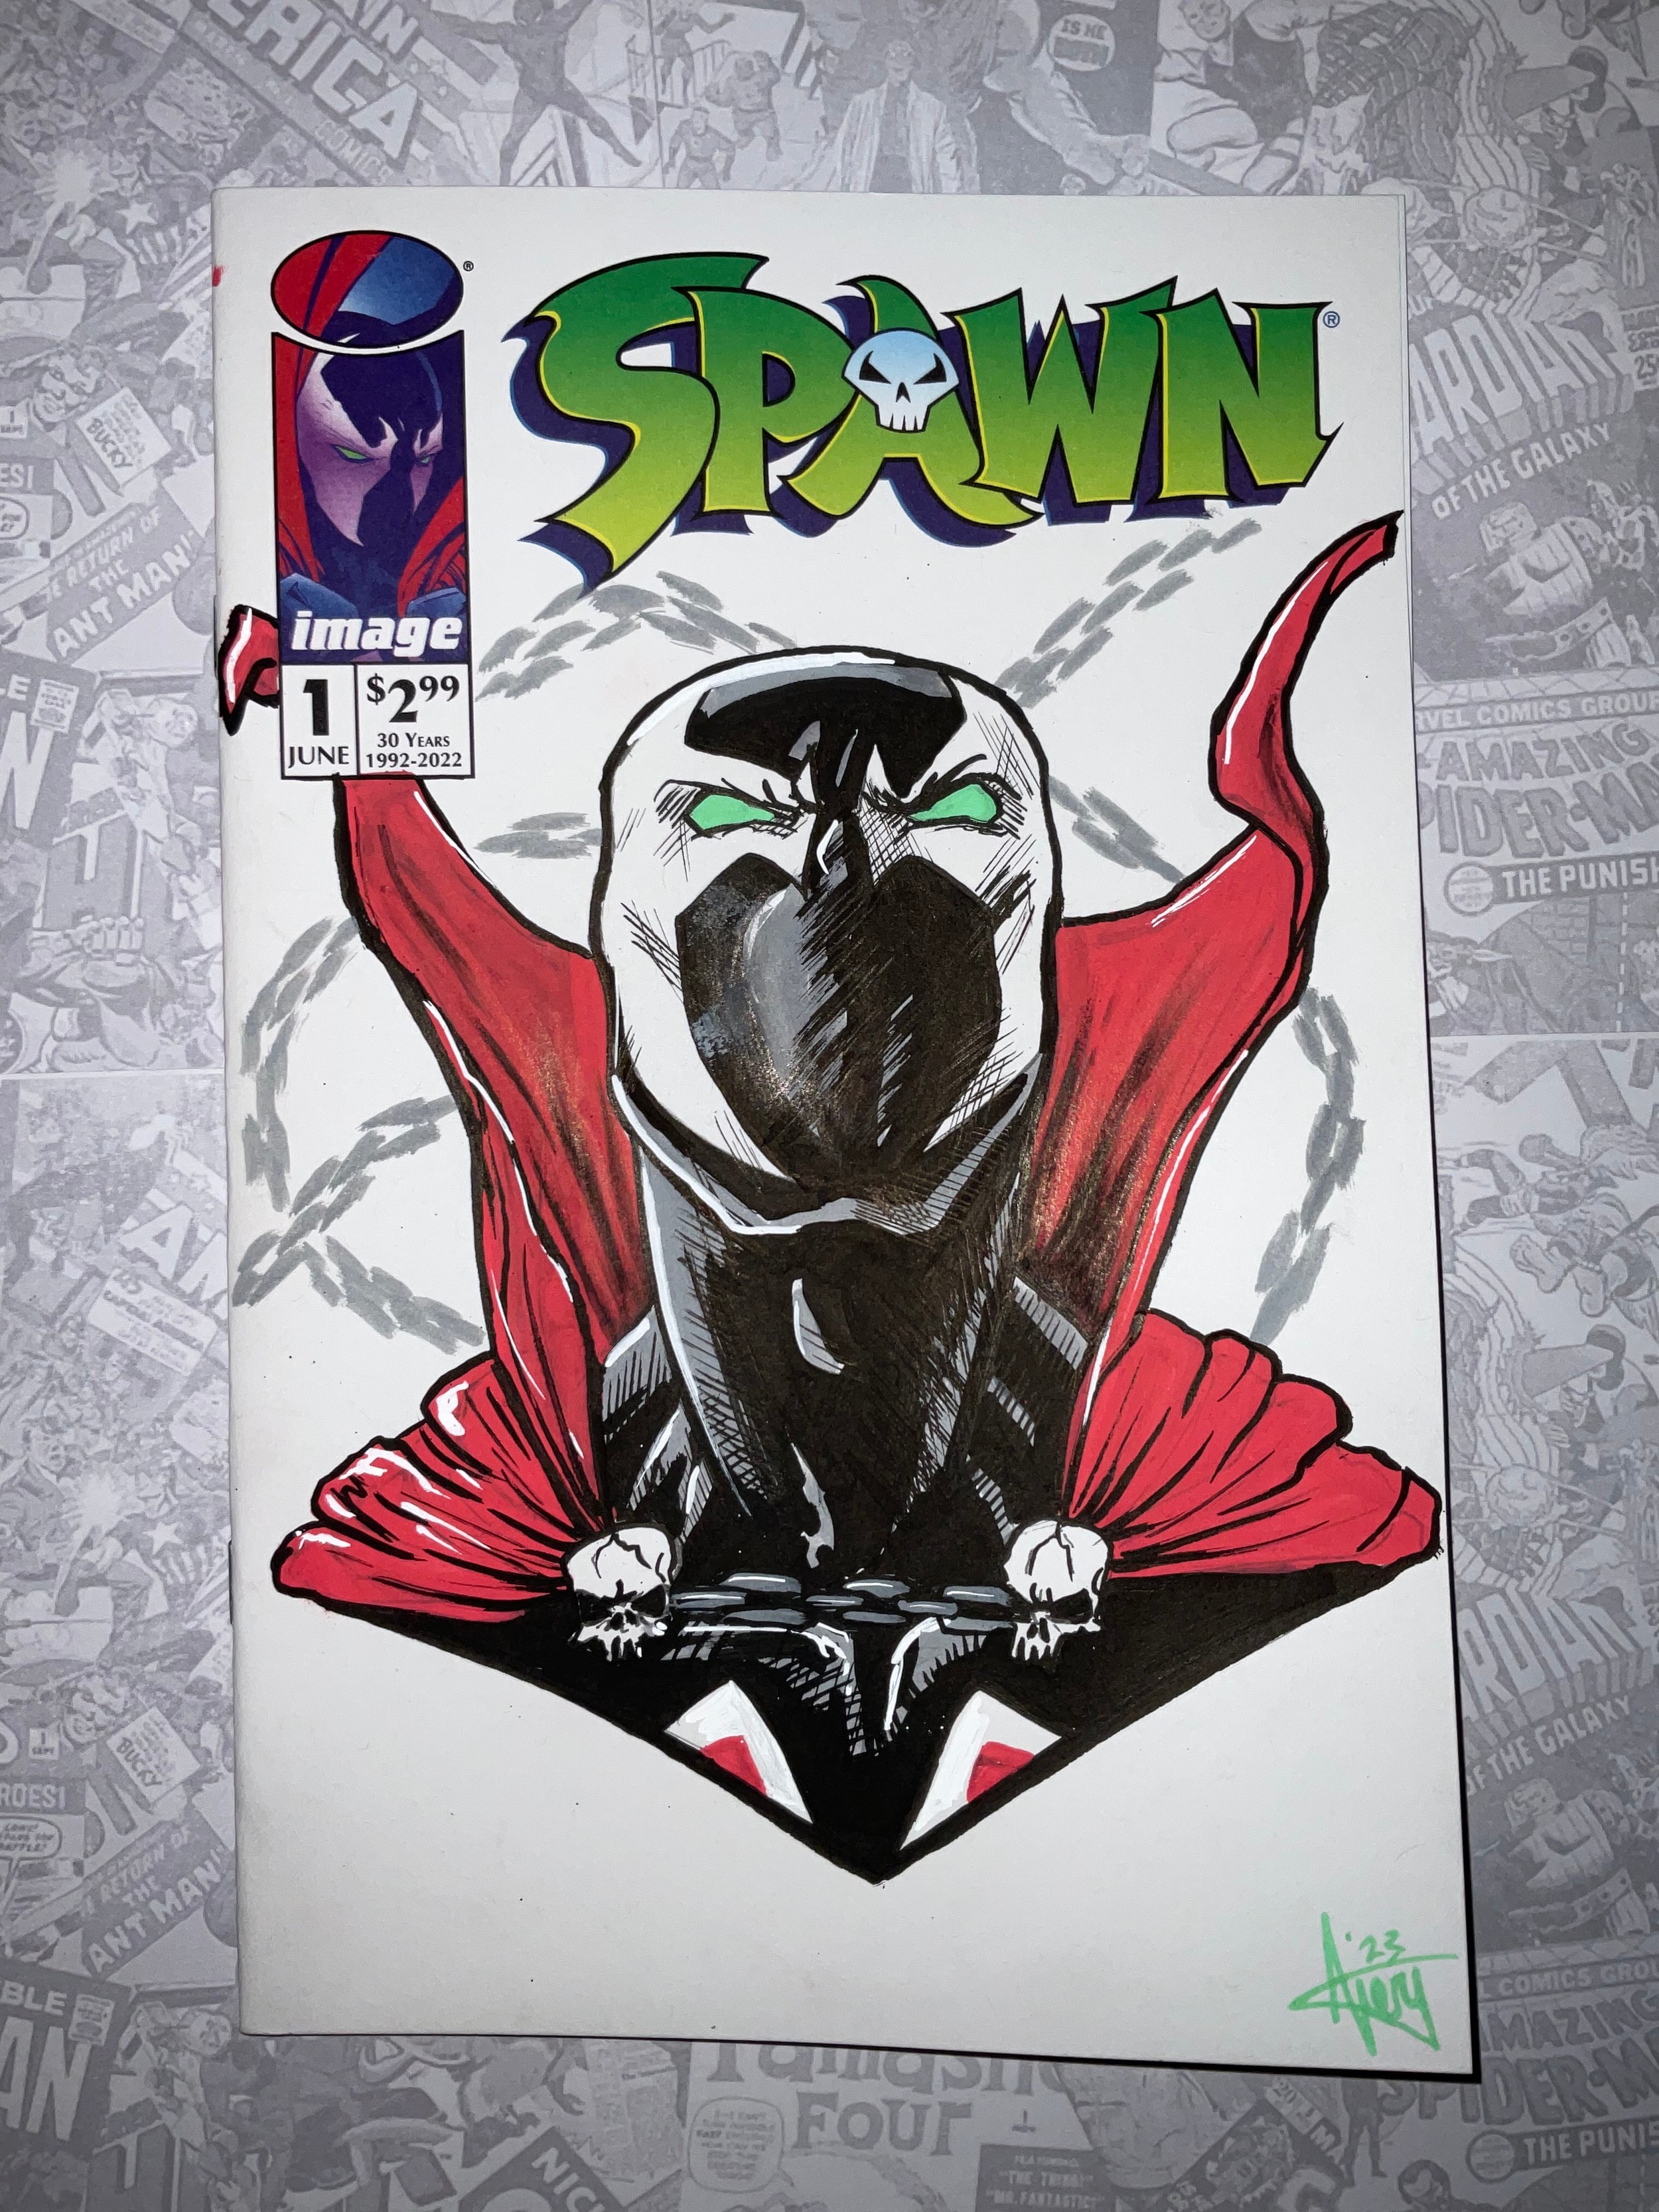 Comic Book Art. Spawn #1 (June 2022) Image Comics Blank Variant. Original sketch cover by Kris Avery